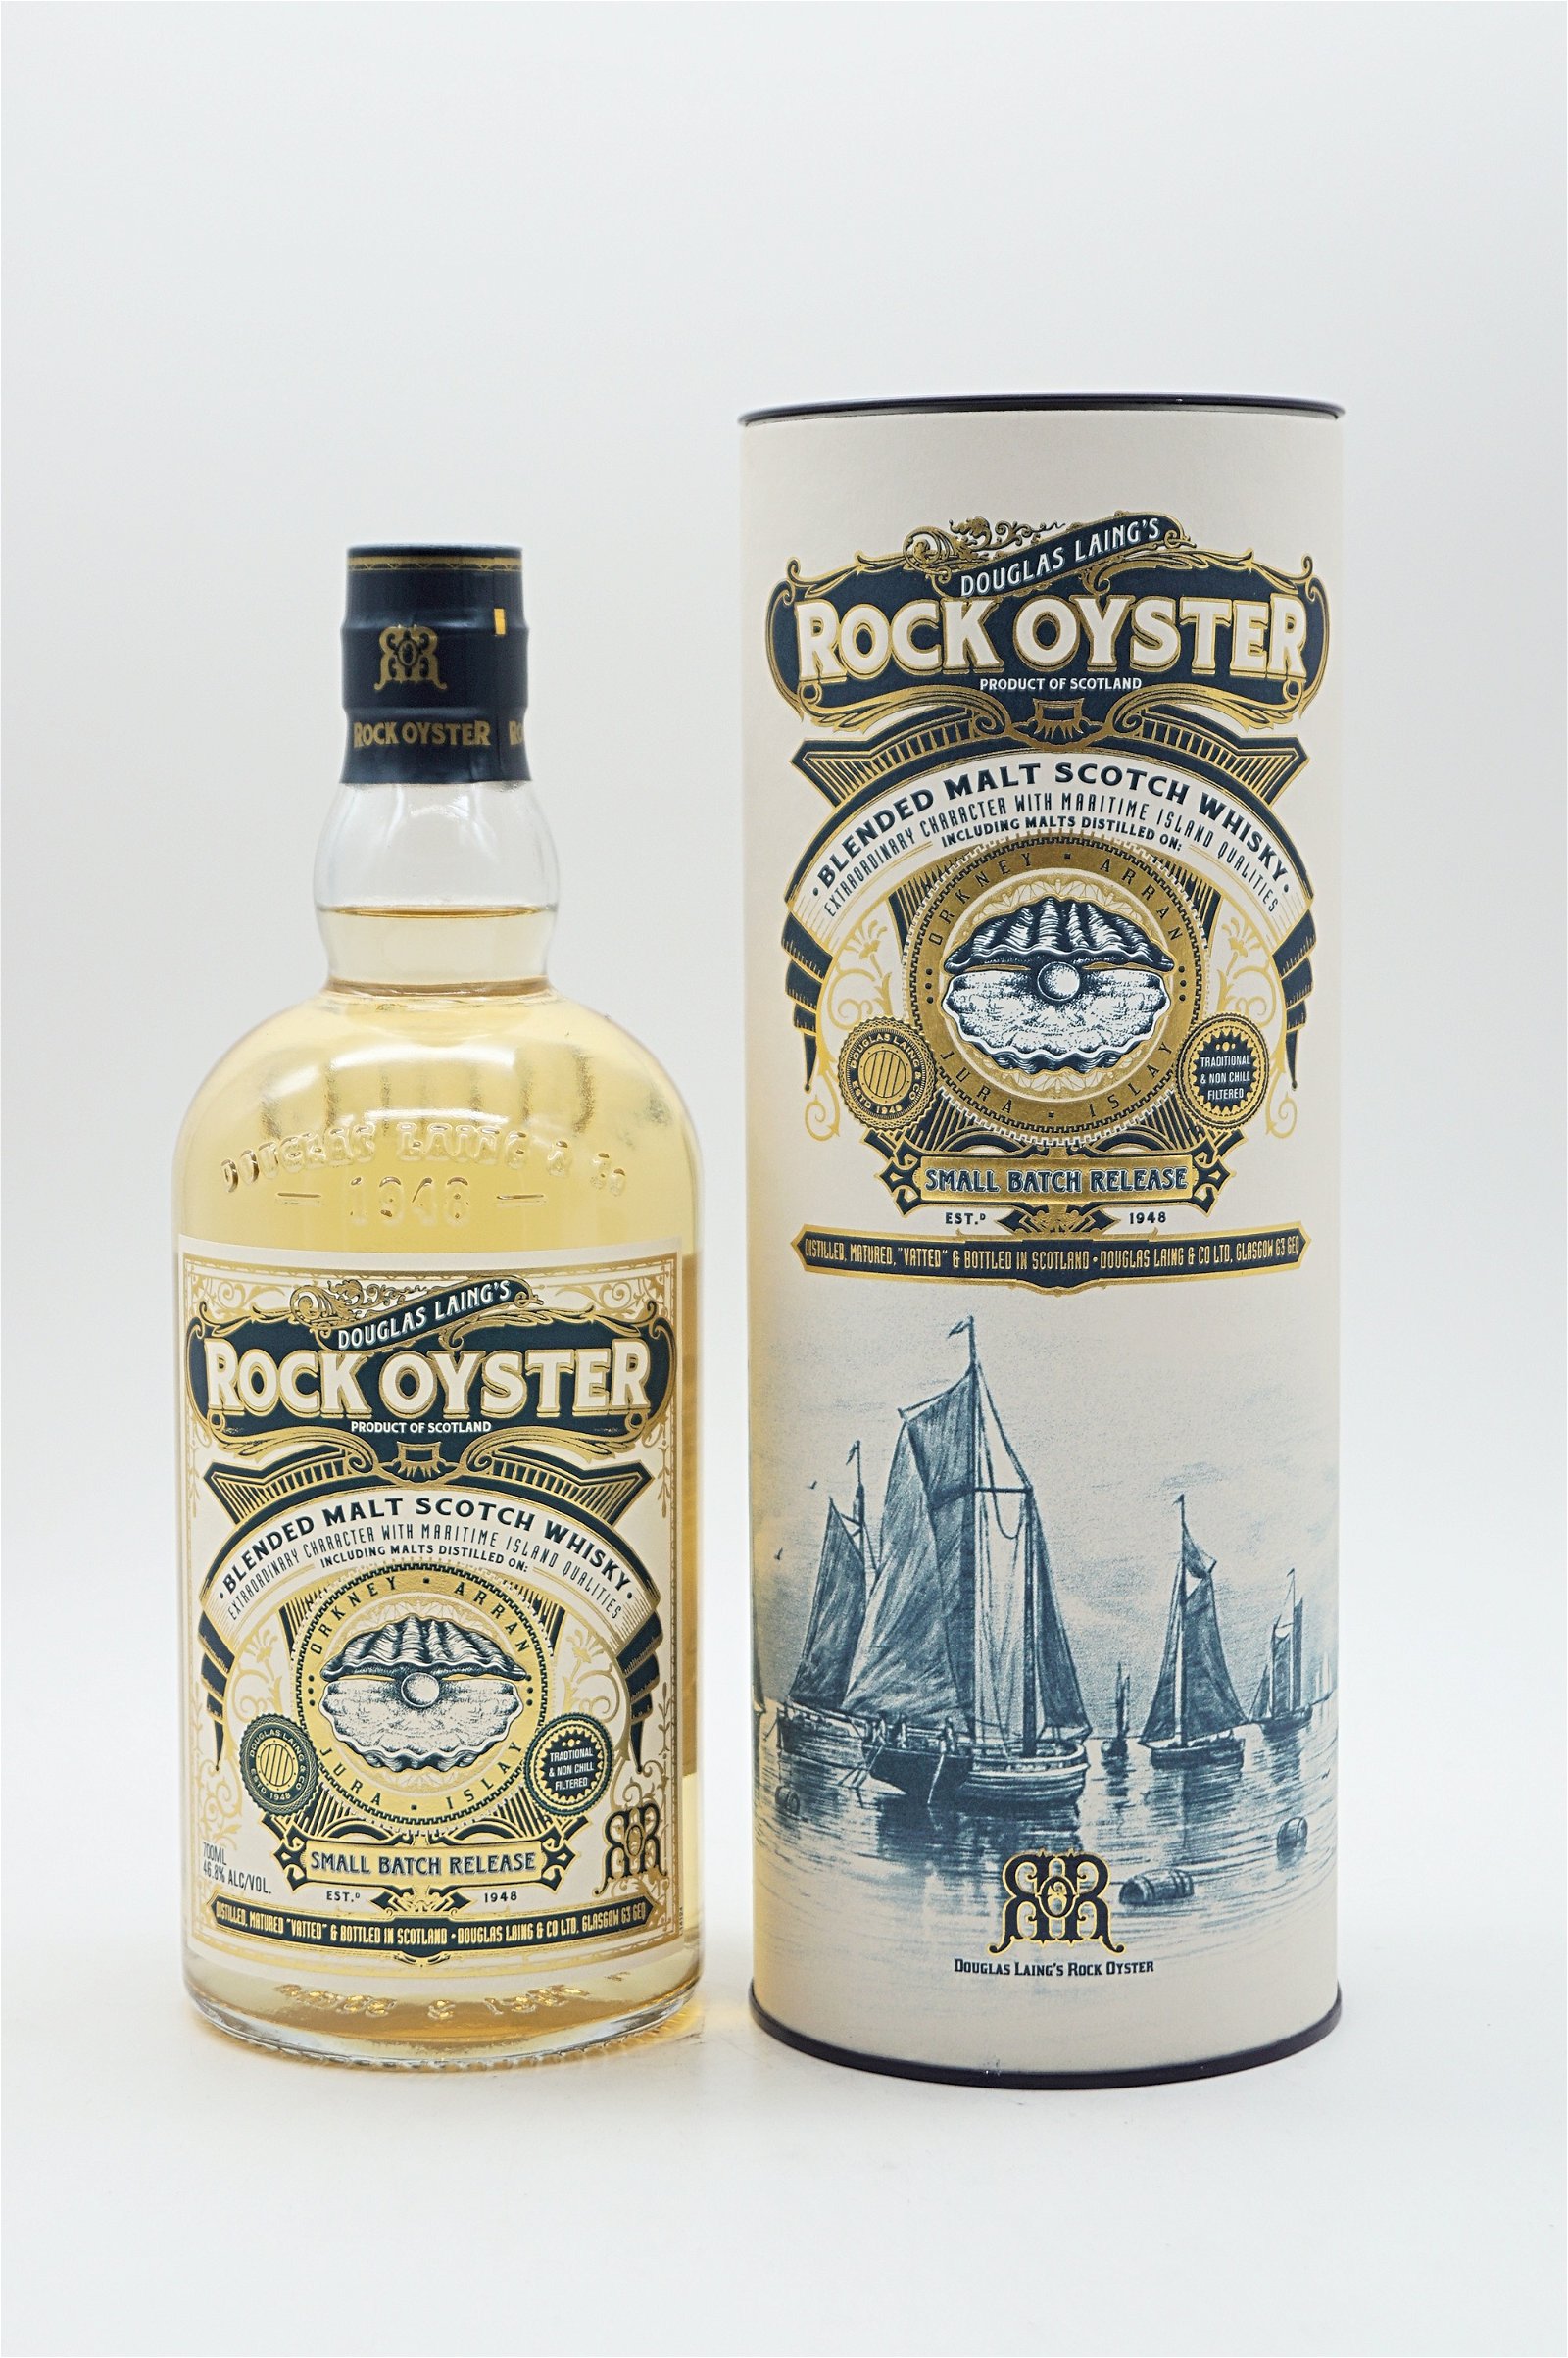 Rock Oyster Small Batch Release Blended Malt Scotch Whisky